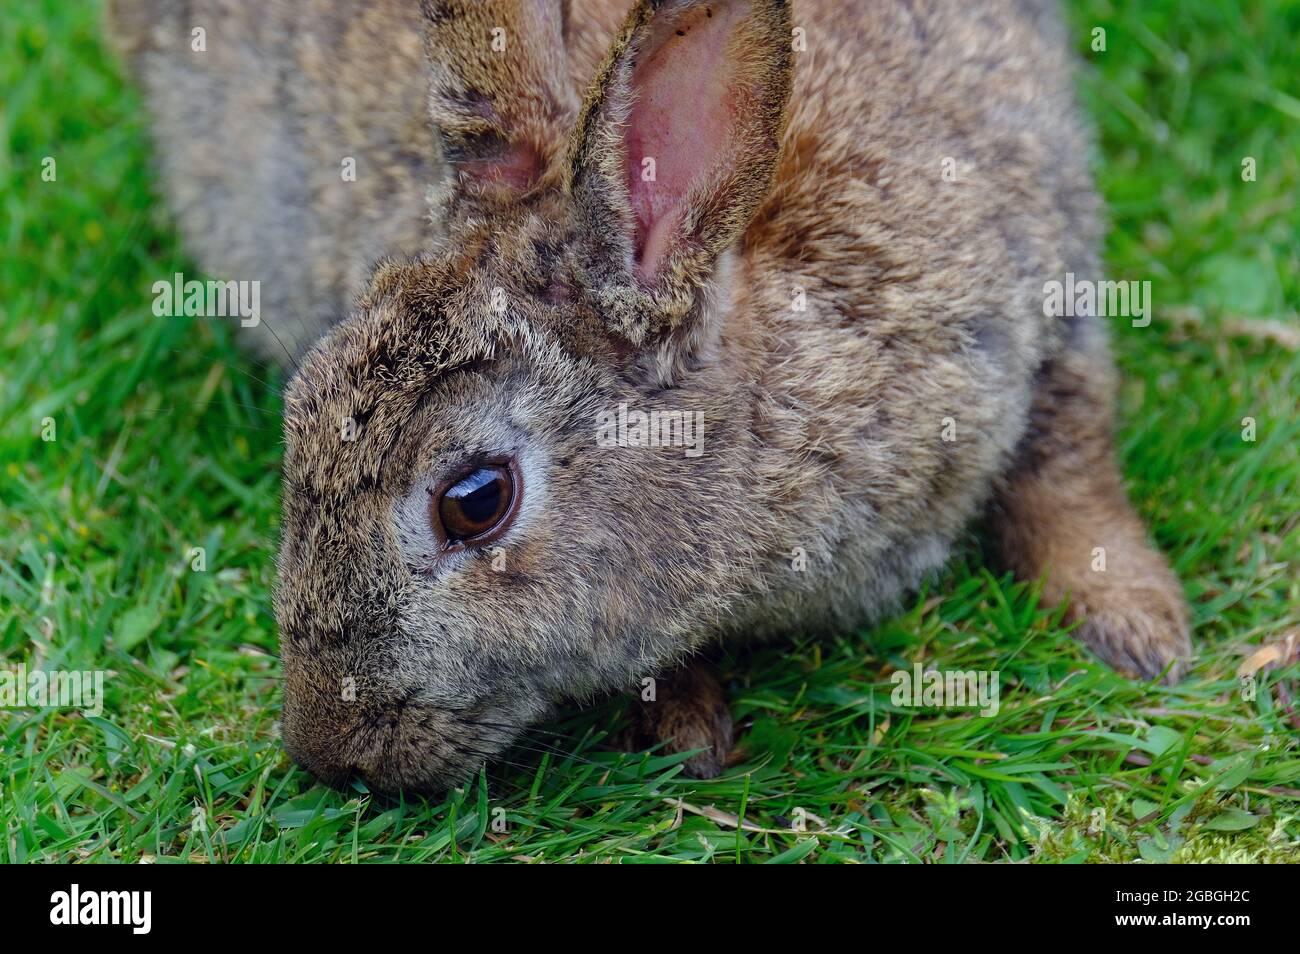 Wild rabbit feeding in urban house garden. Stock Photo